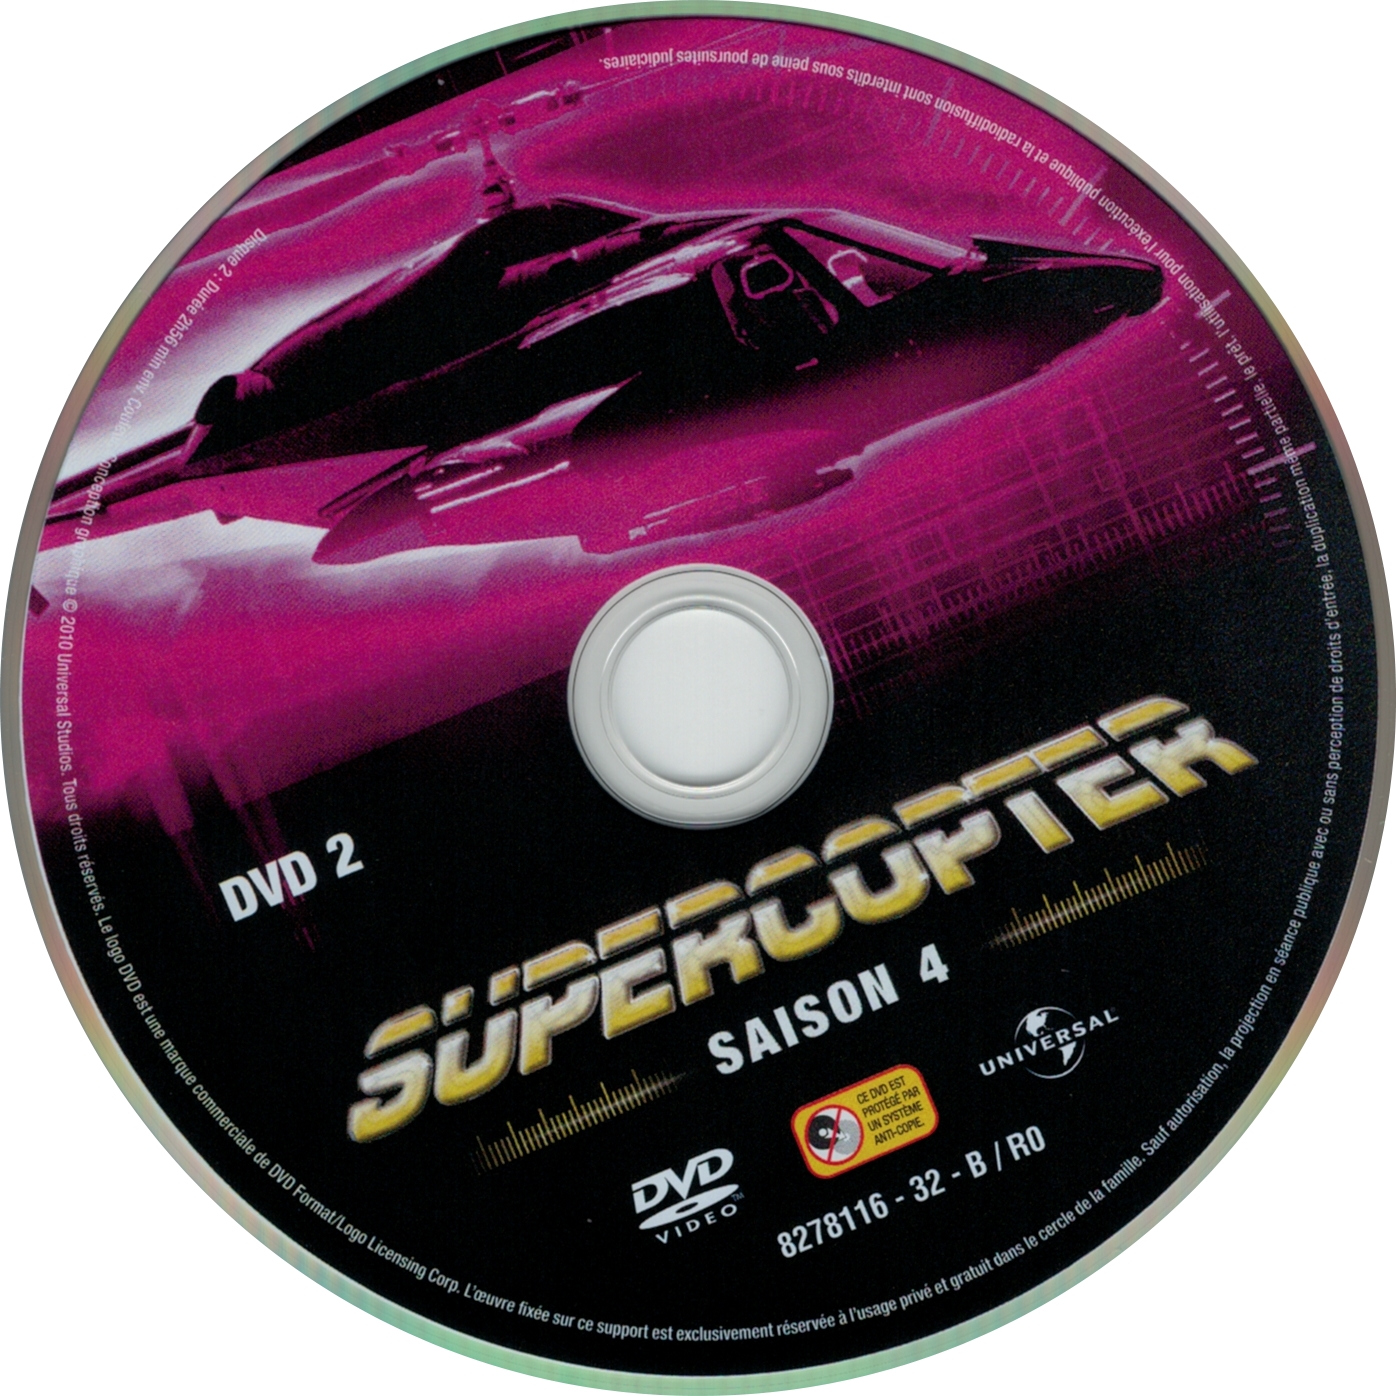 Supercopter Saison 4 DVD 2